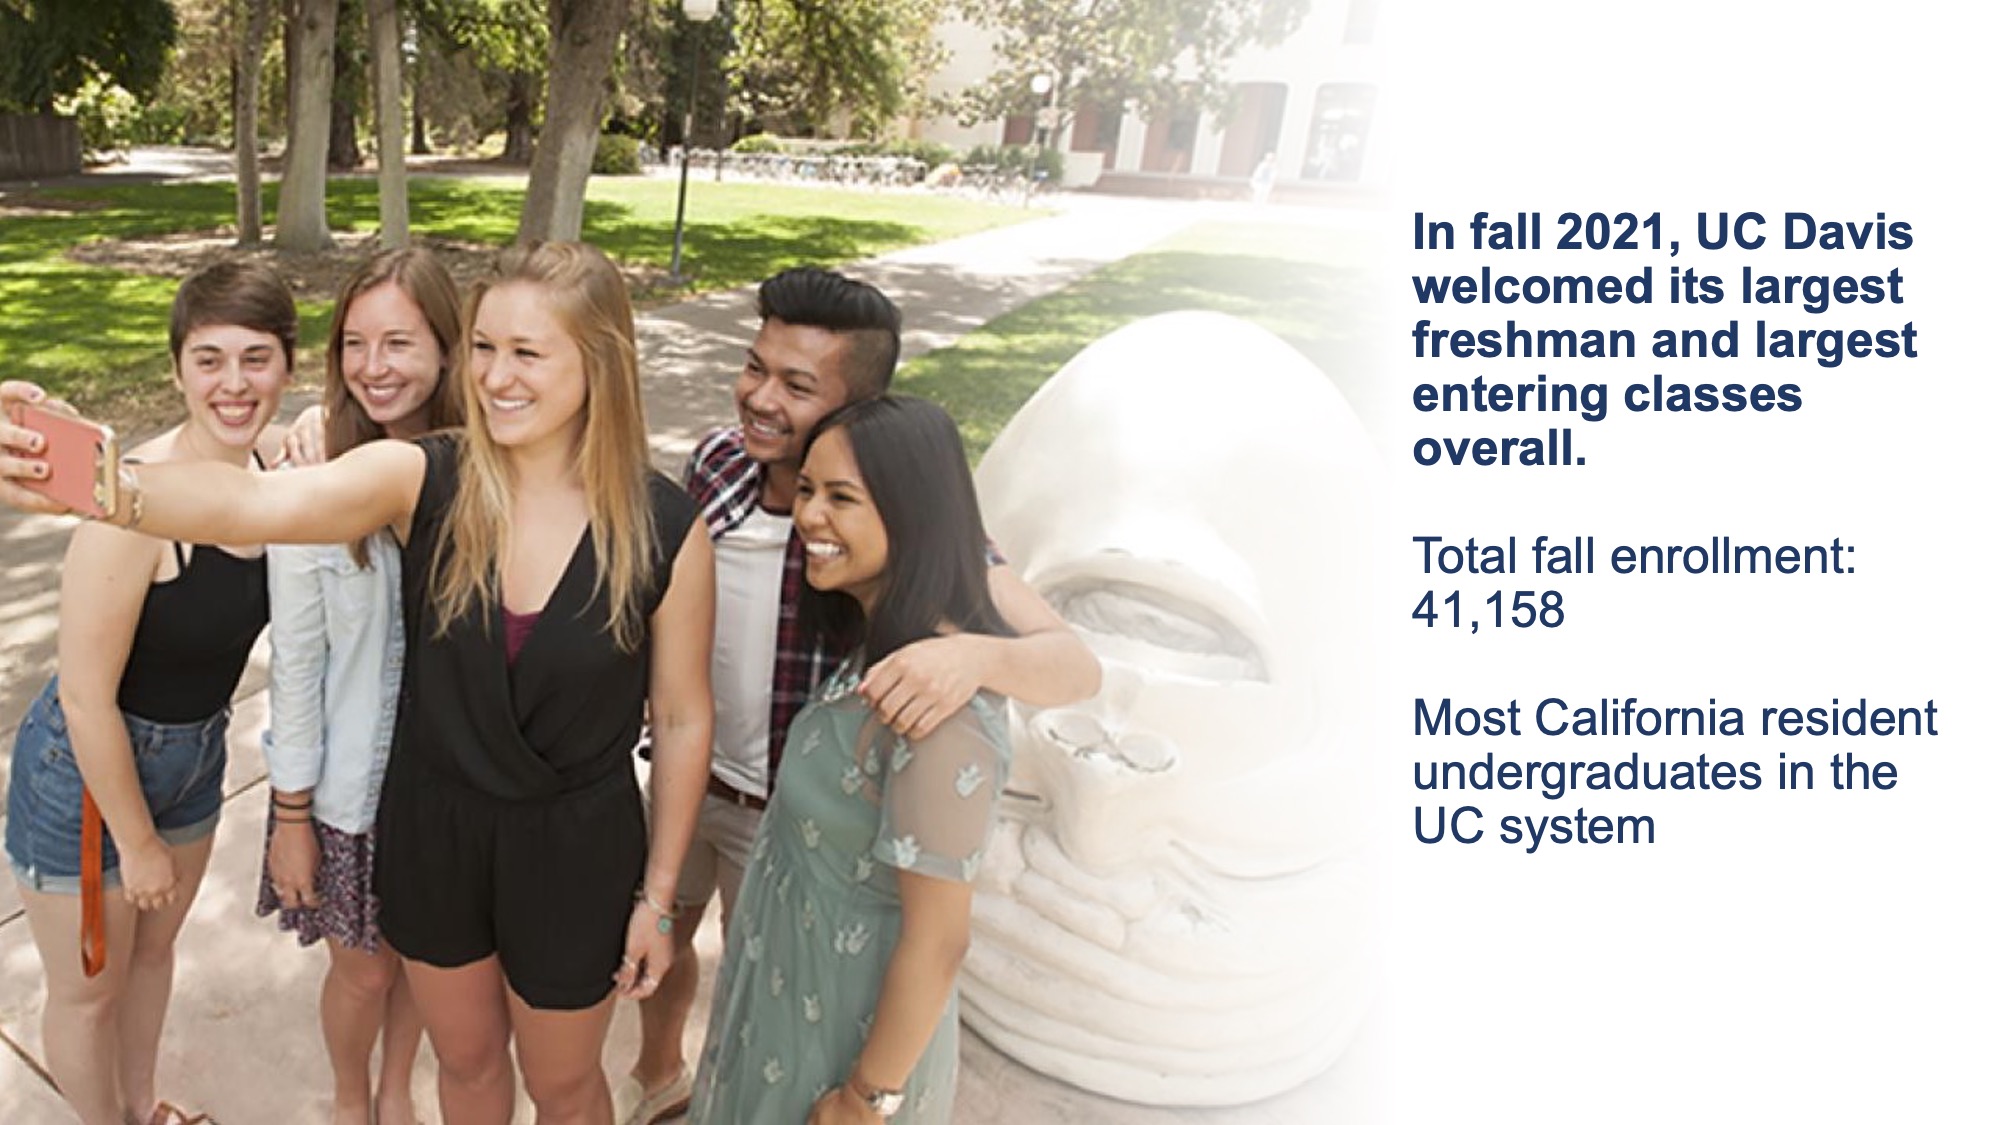 UC Davis fall enrollment figures